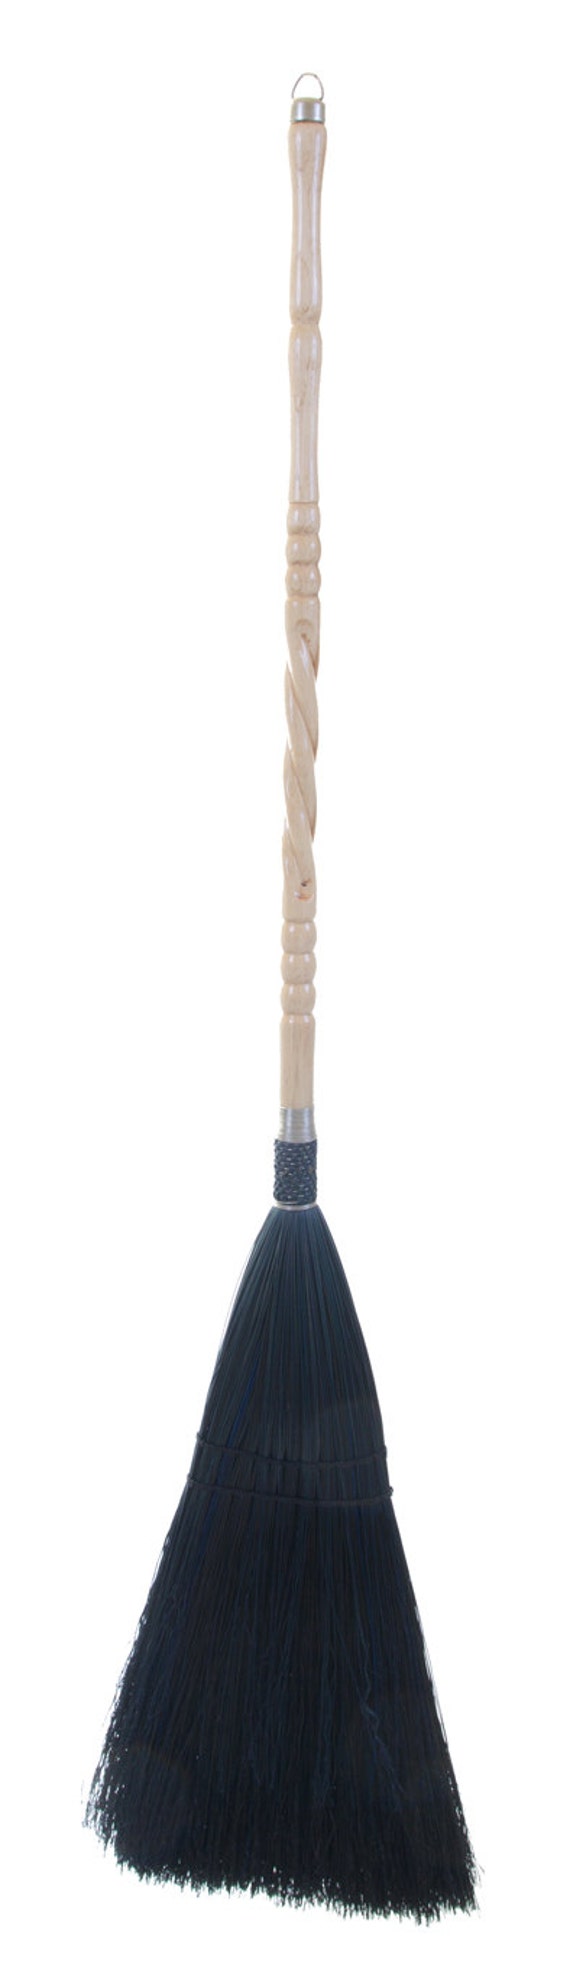 small wooden broom